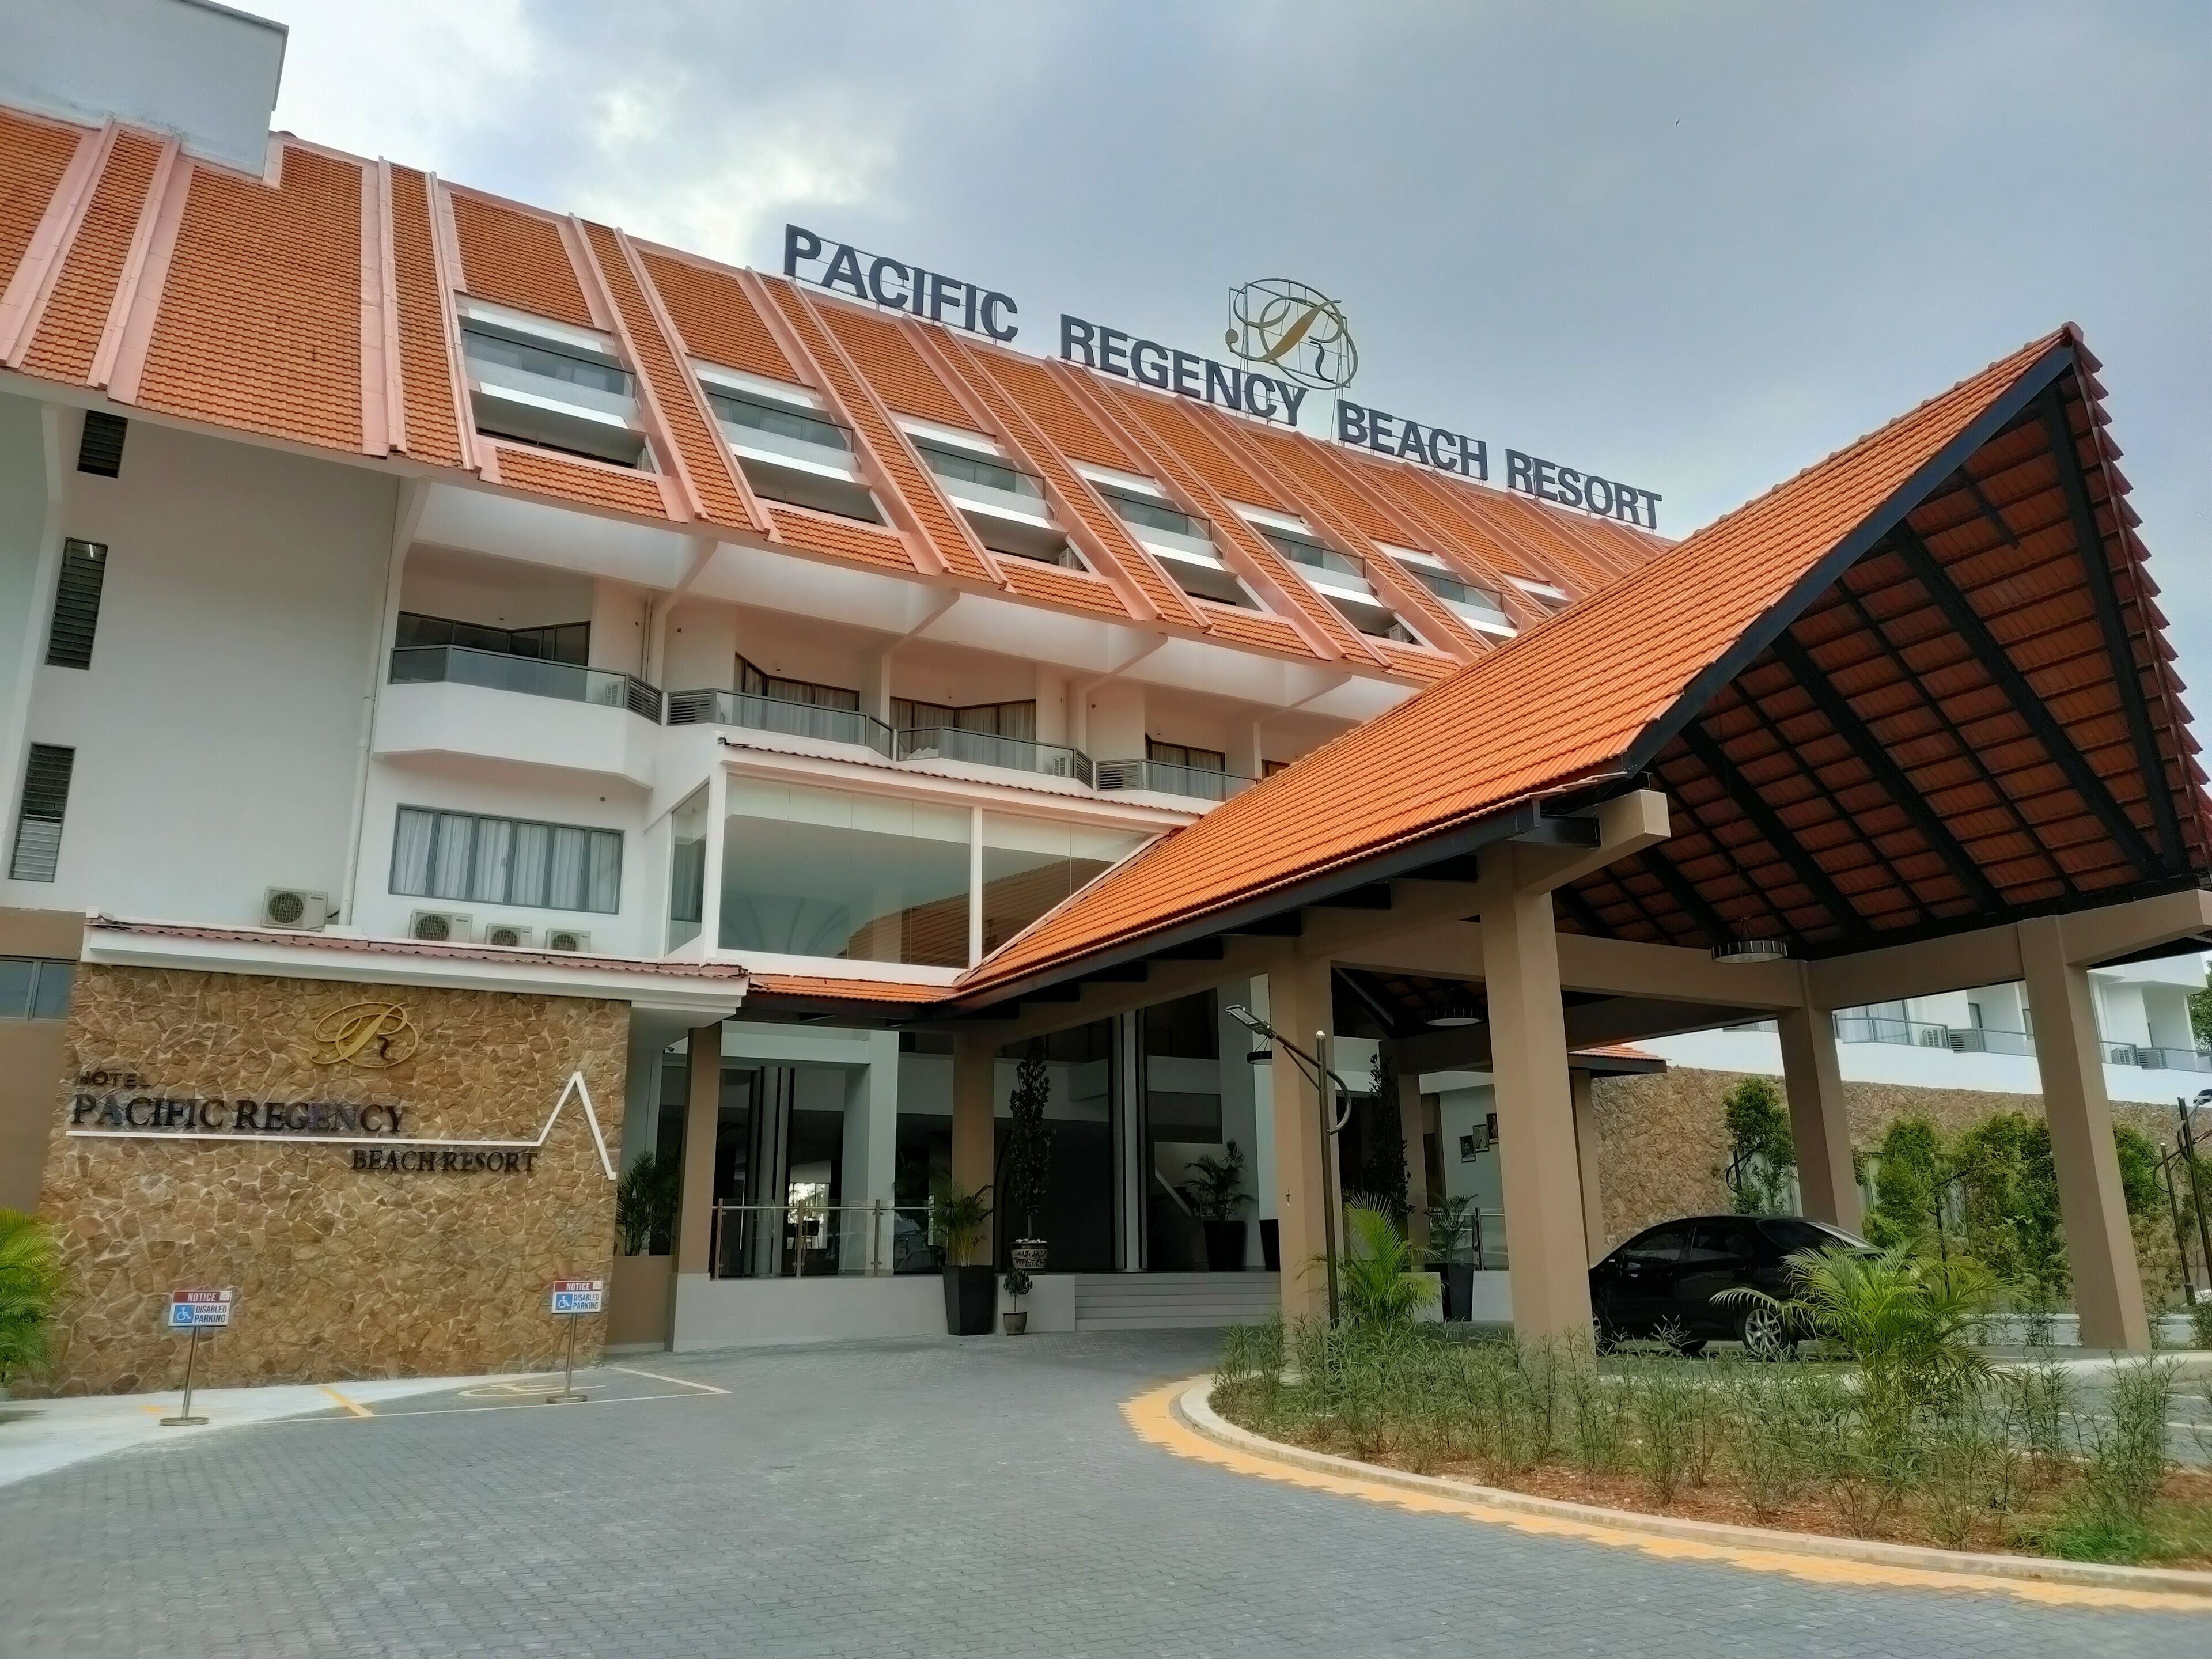 Pacific Regency Beach Resort